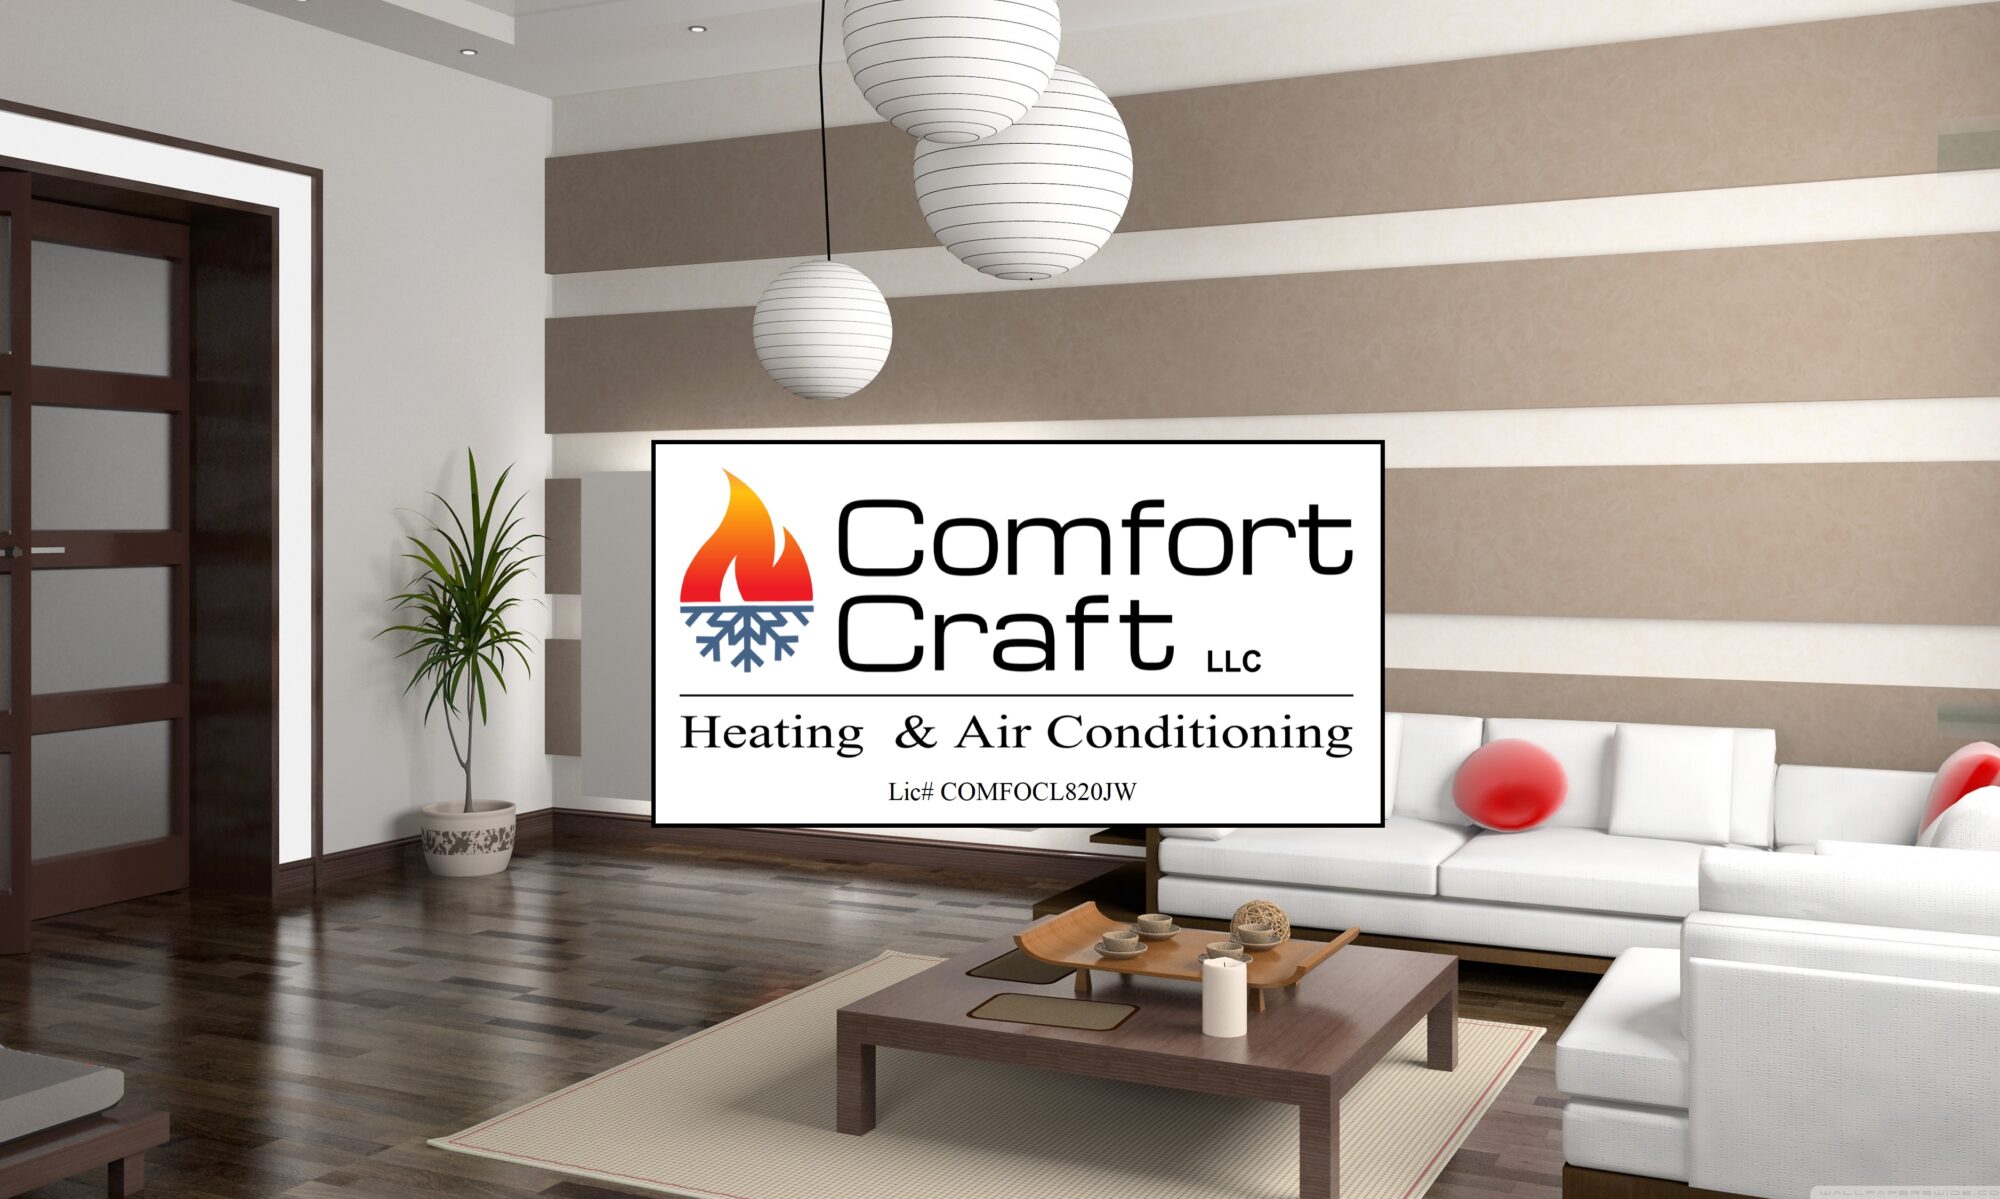 Comfort Craft LLC